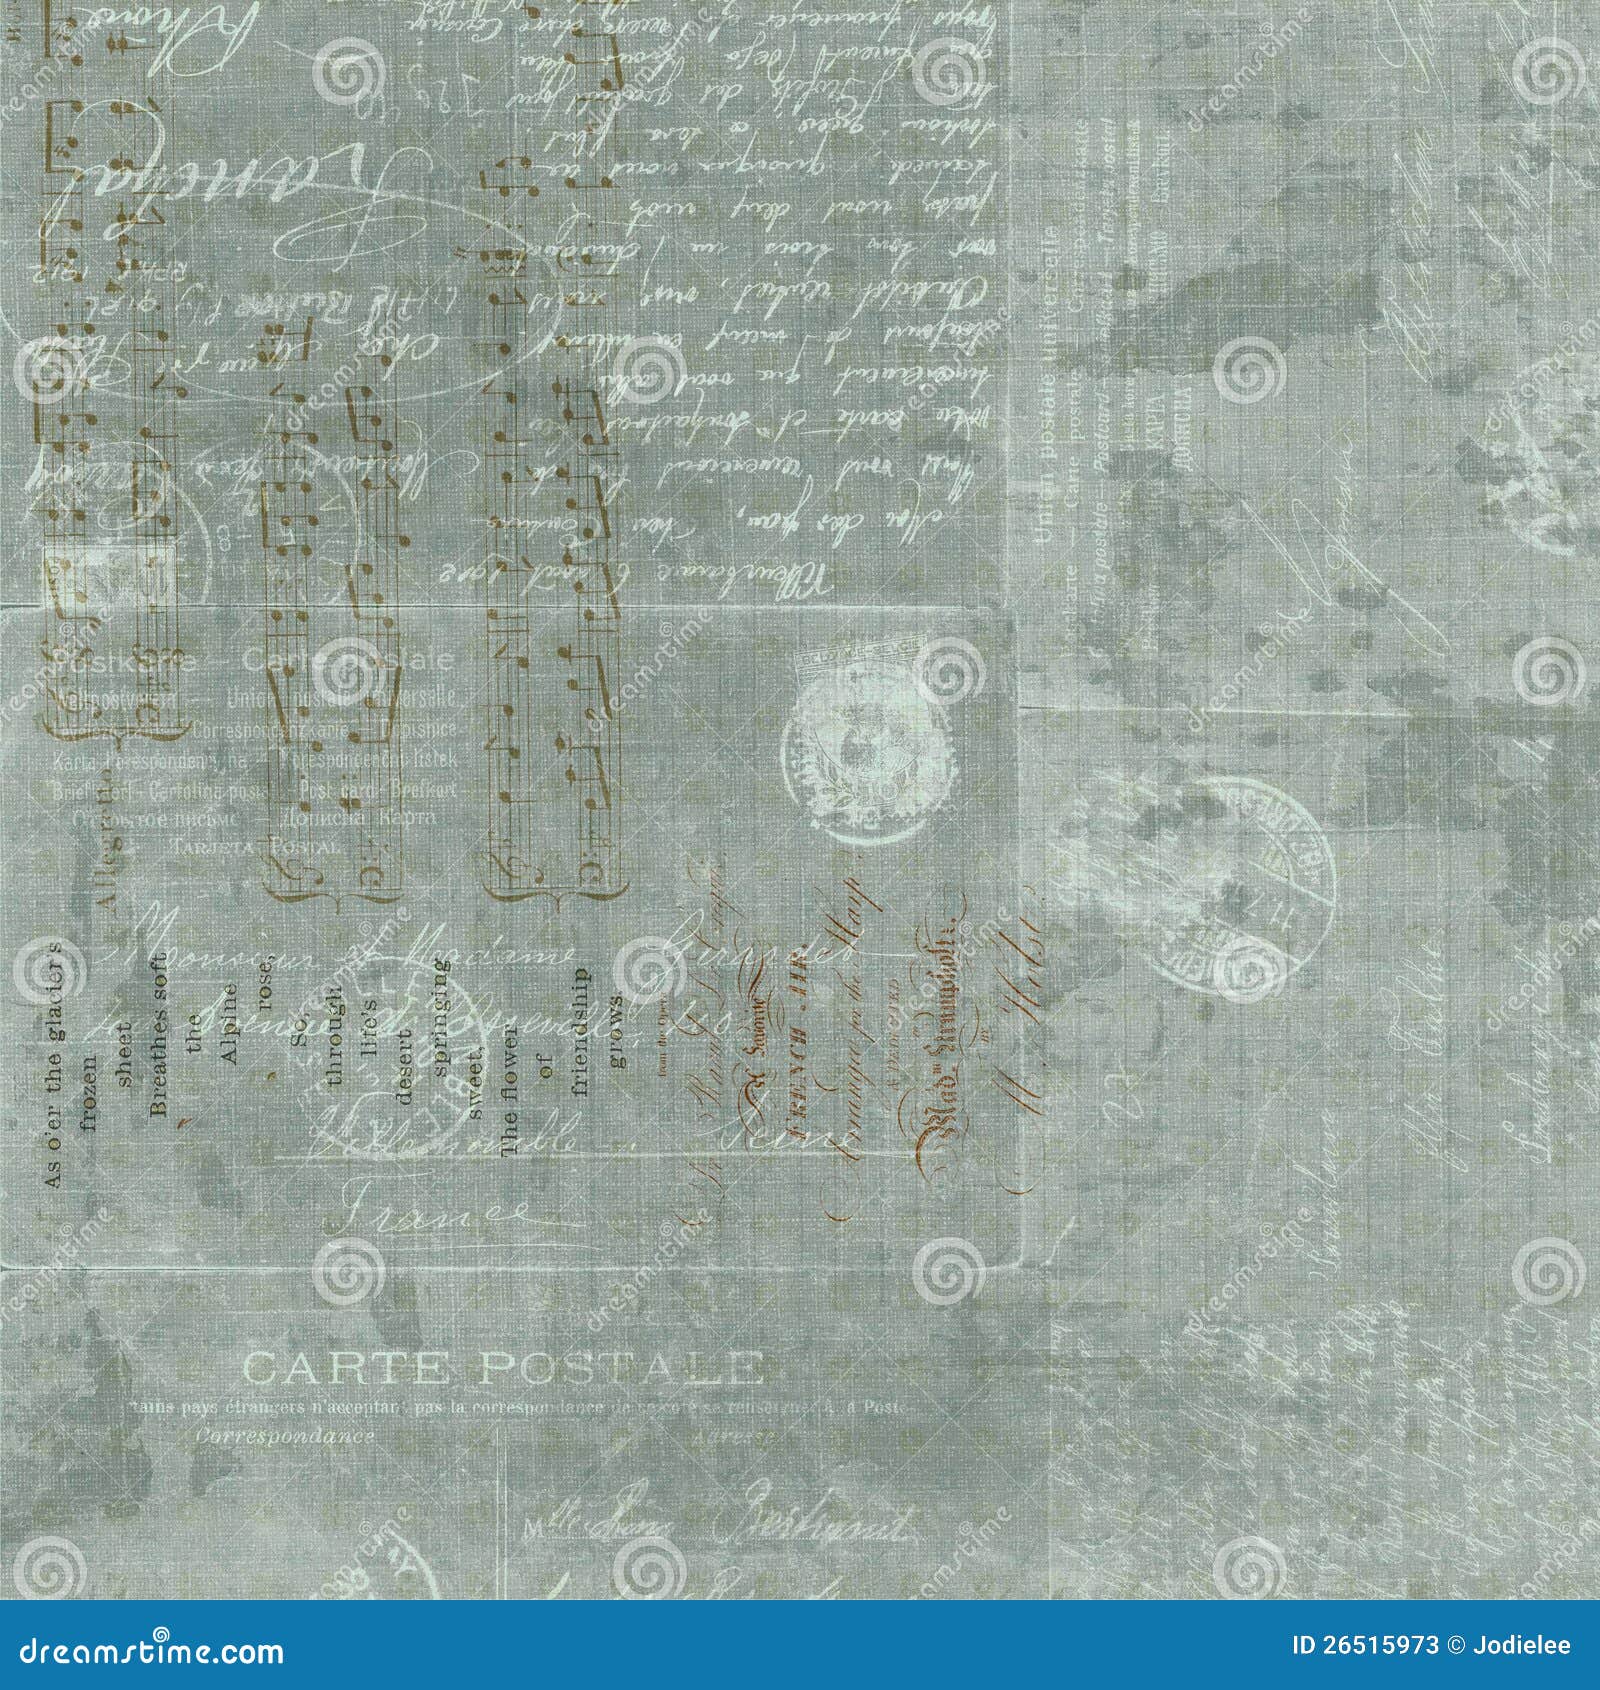 vintage french letter script collage background